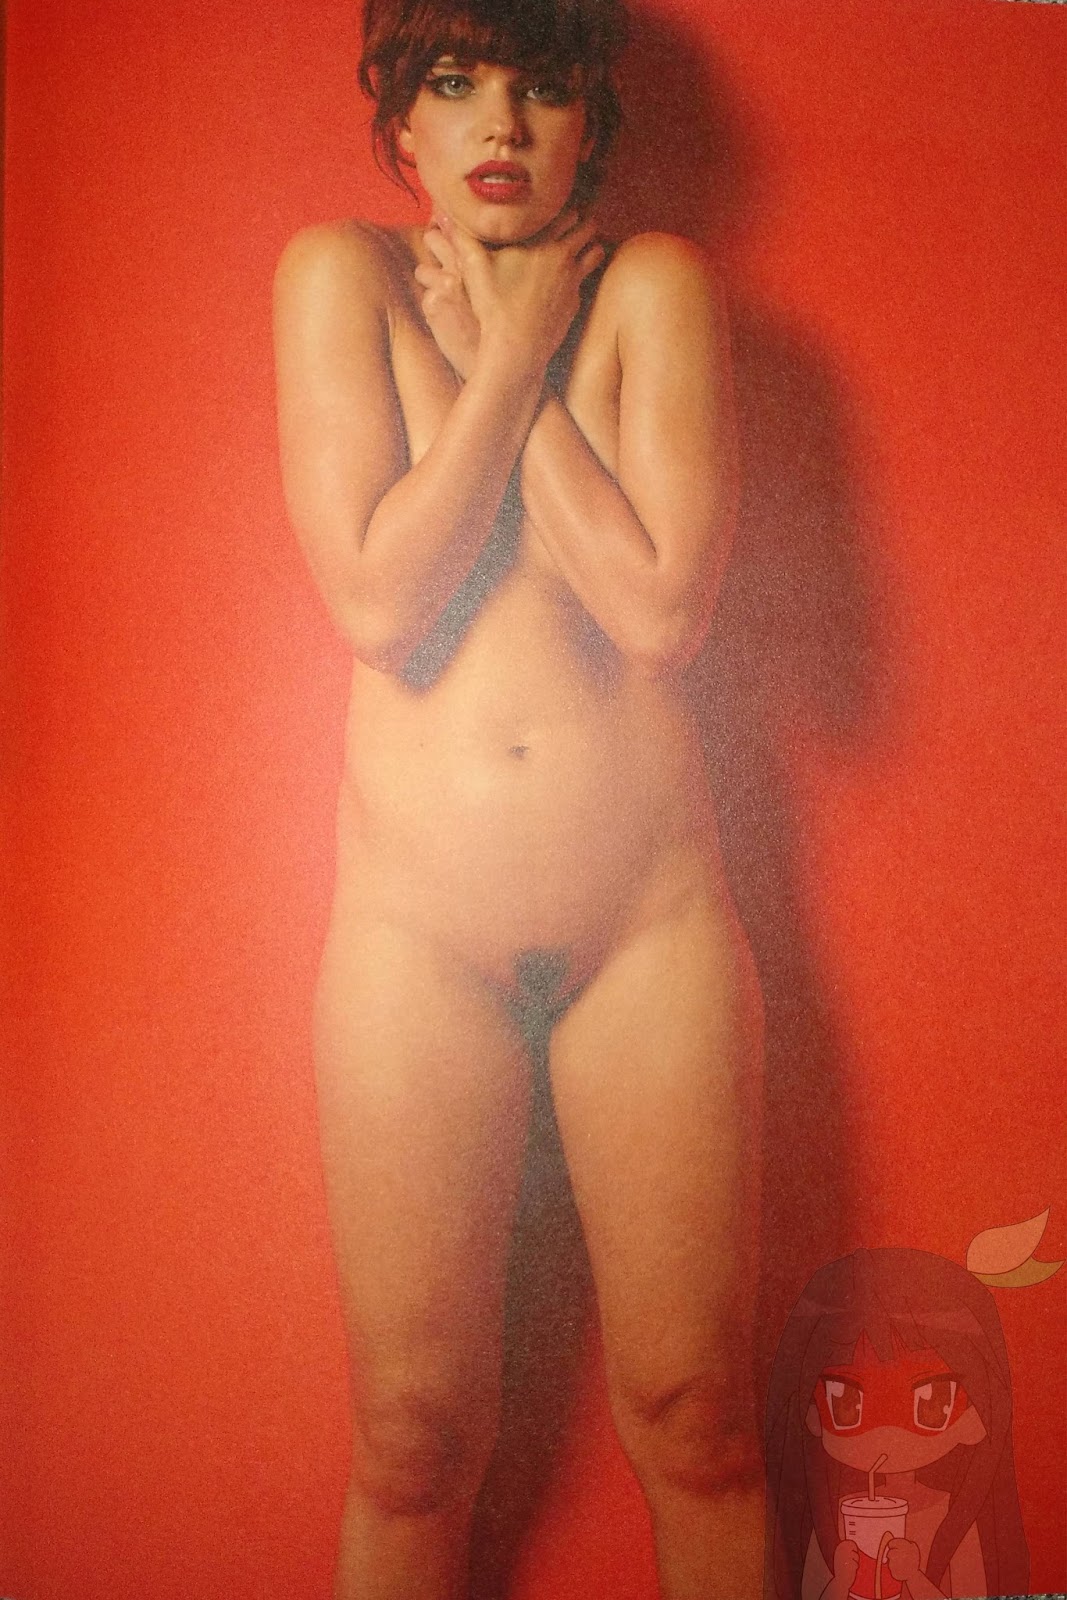 Naked Bruna Linzmeyer. Added 07/19/2016 by Lobezno < ANCENSORED